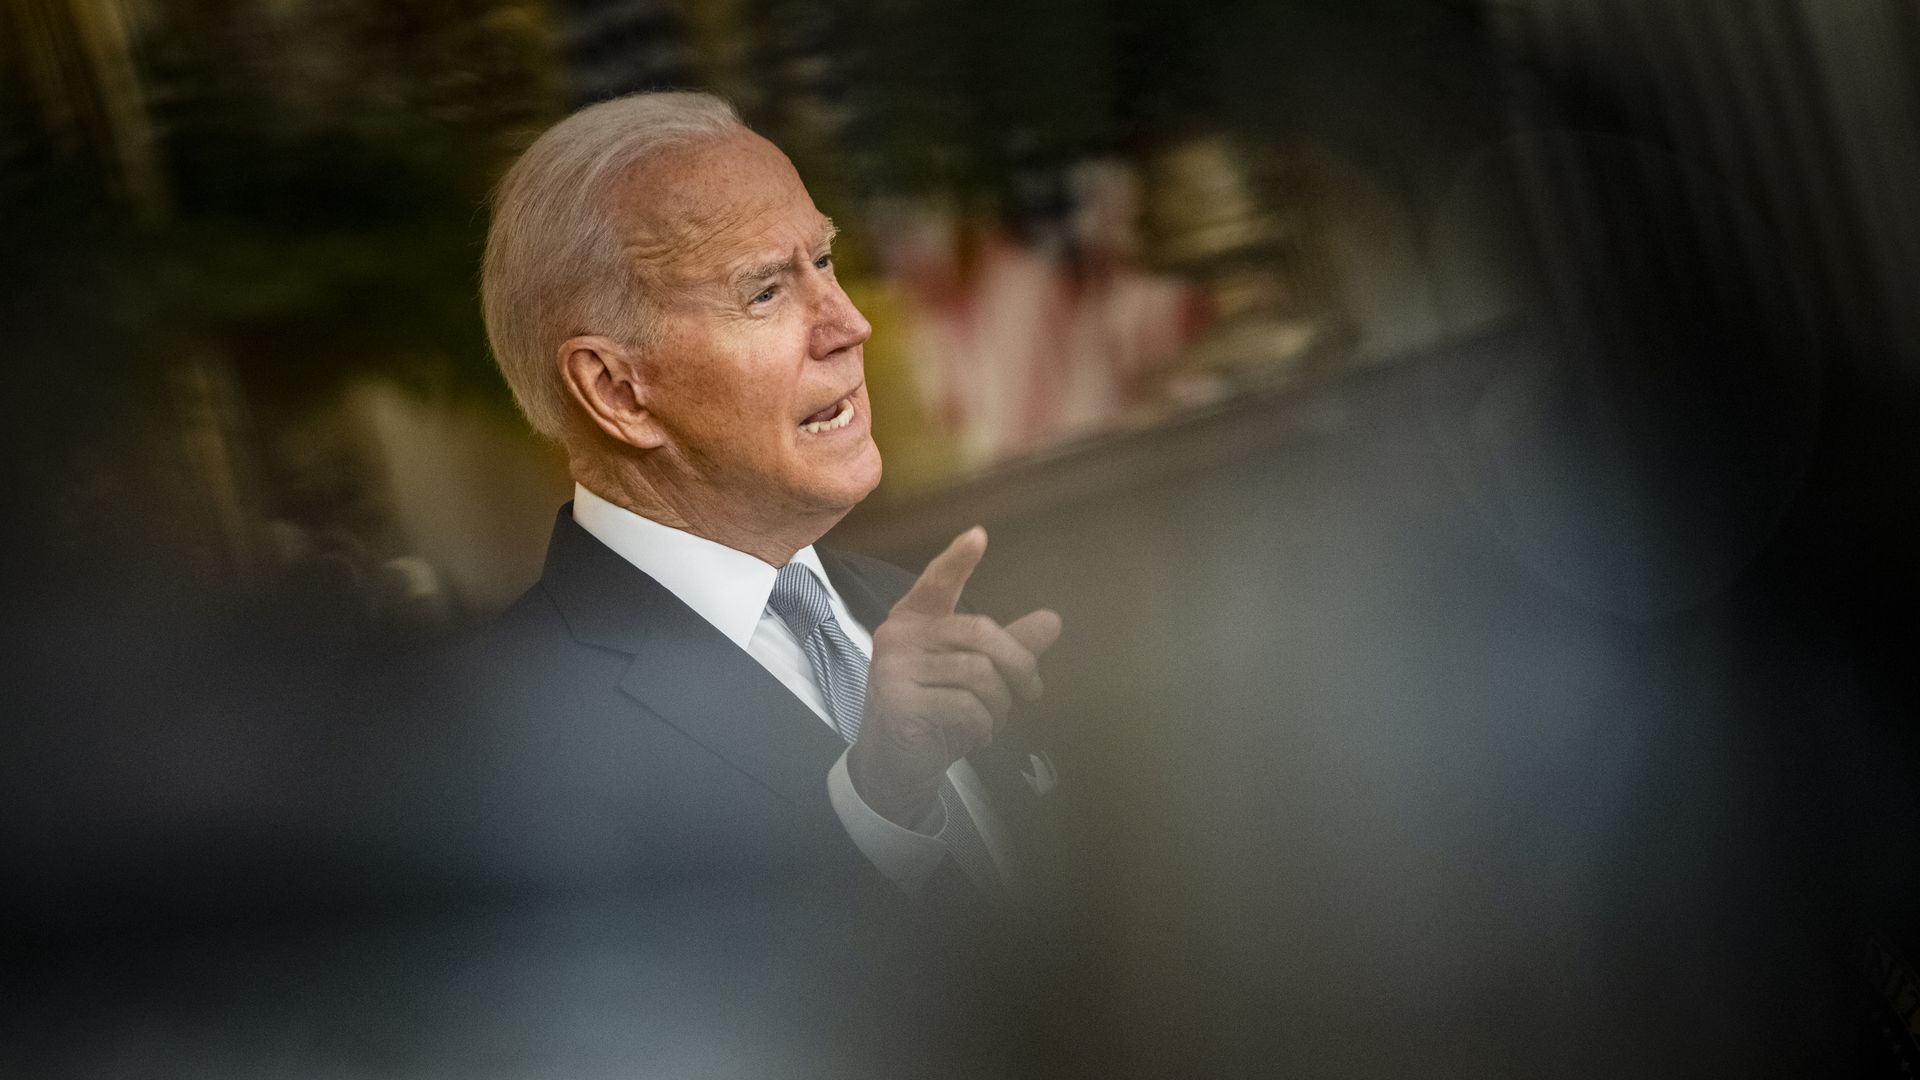 Photo of Joe Biden speaking with one finger raised